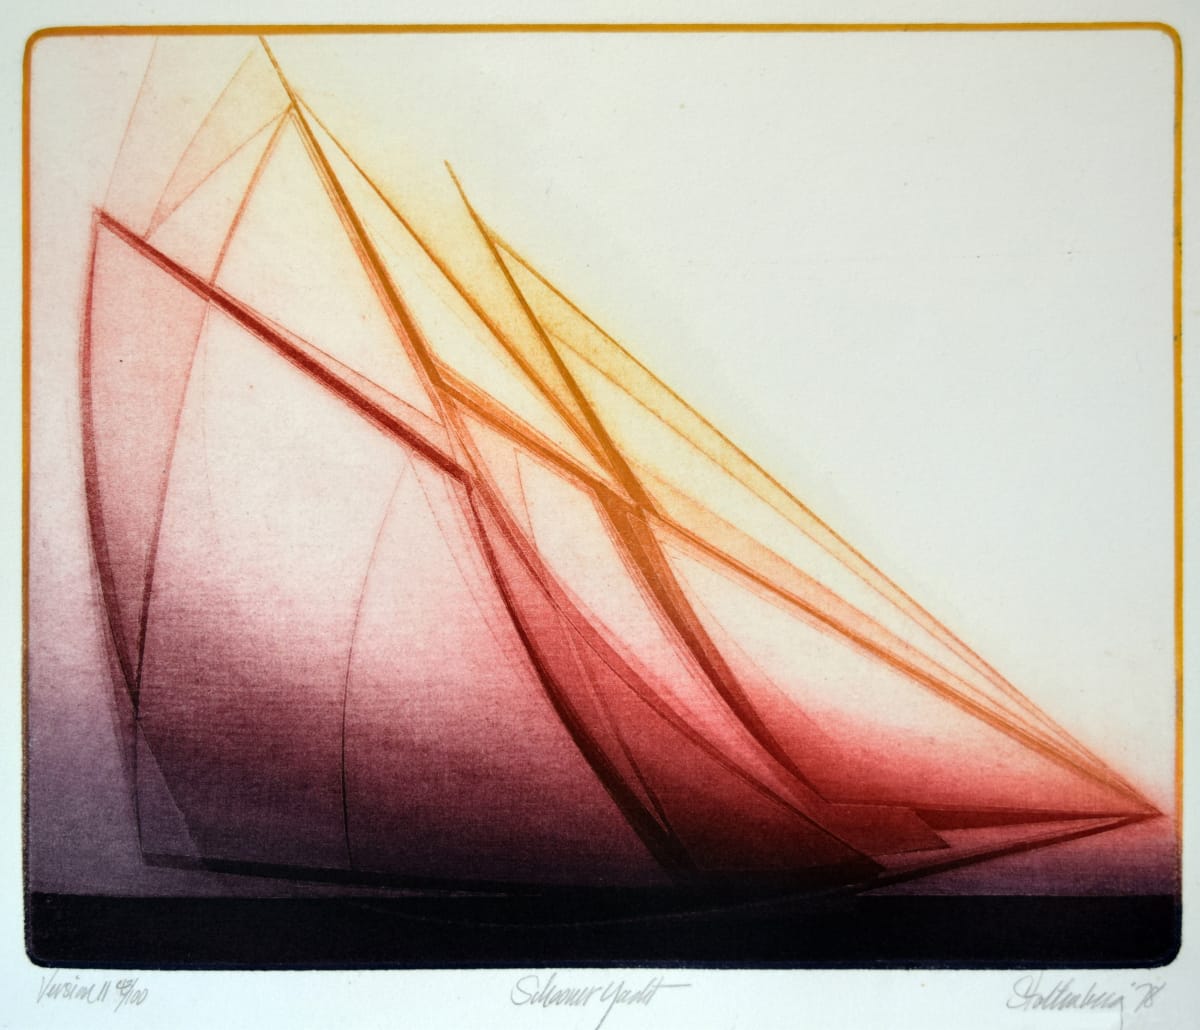 Schooner Yacht (8) by Donald Stoltenberg  Image: Schnooner Yacht by Donald Stoltenberg